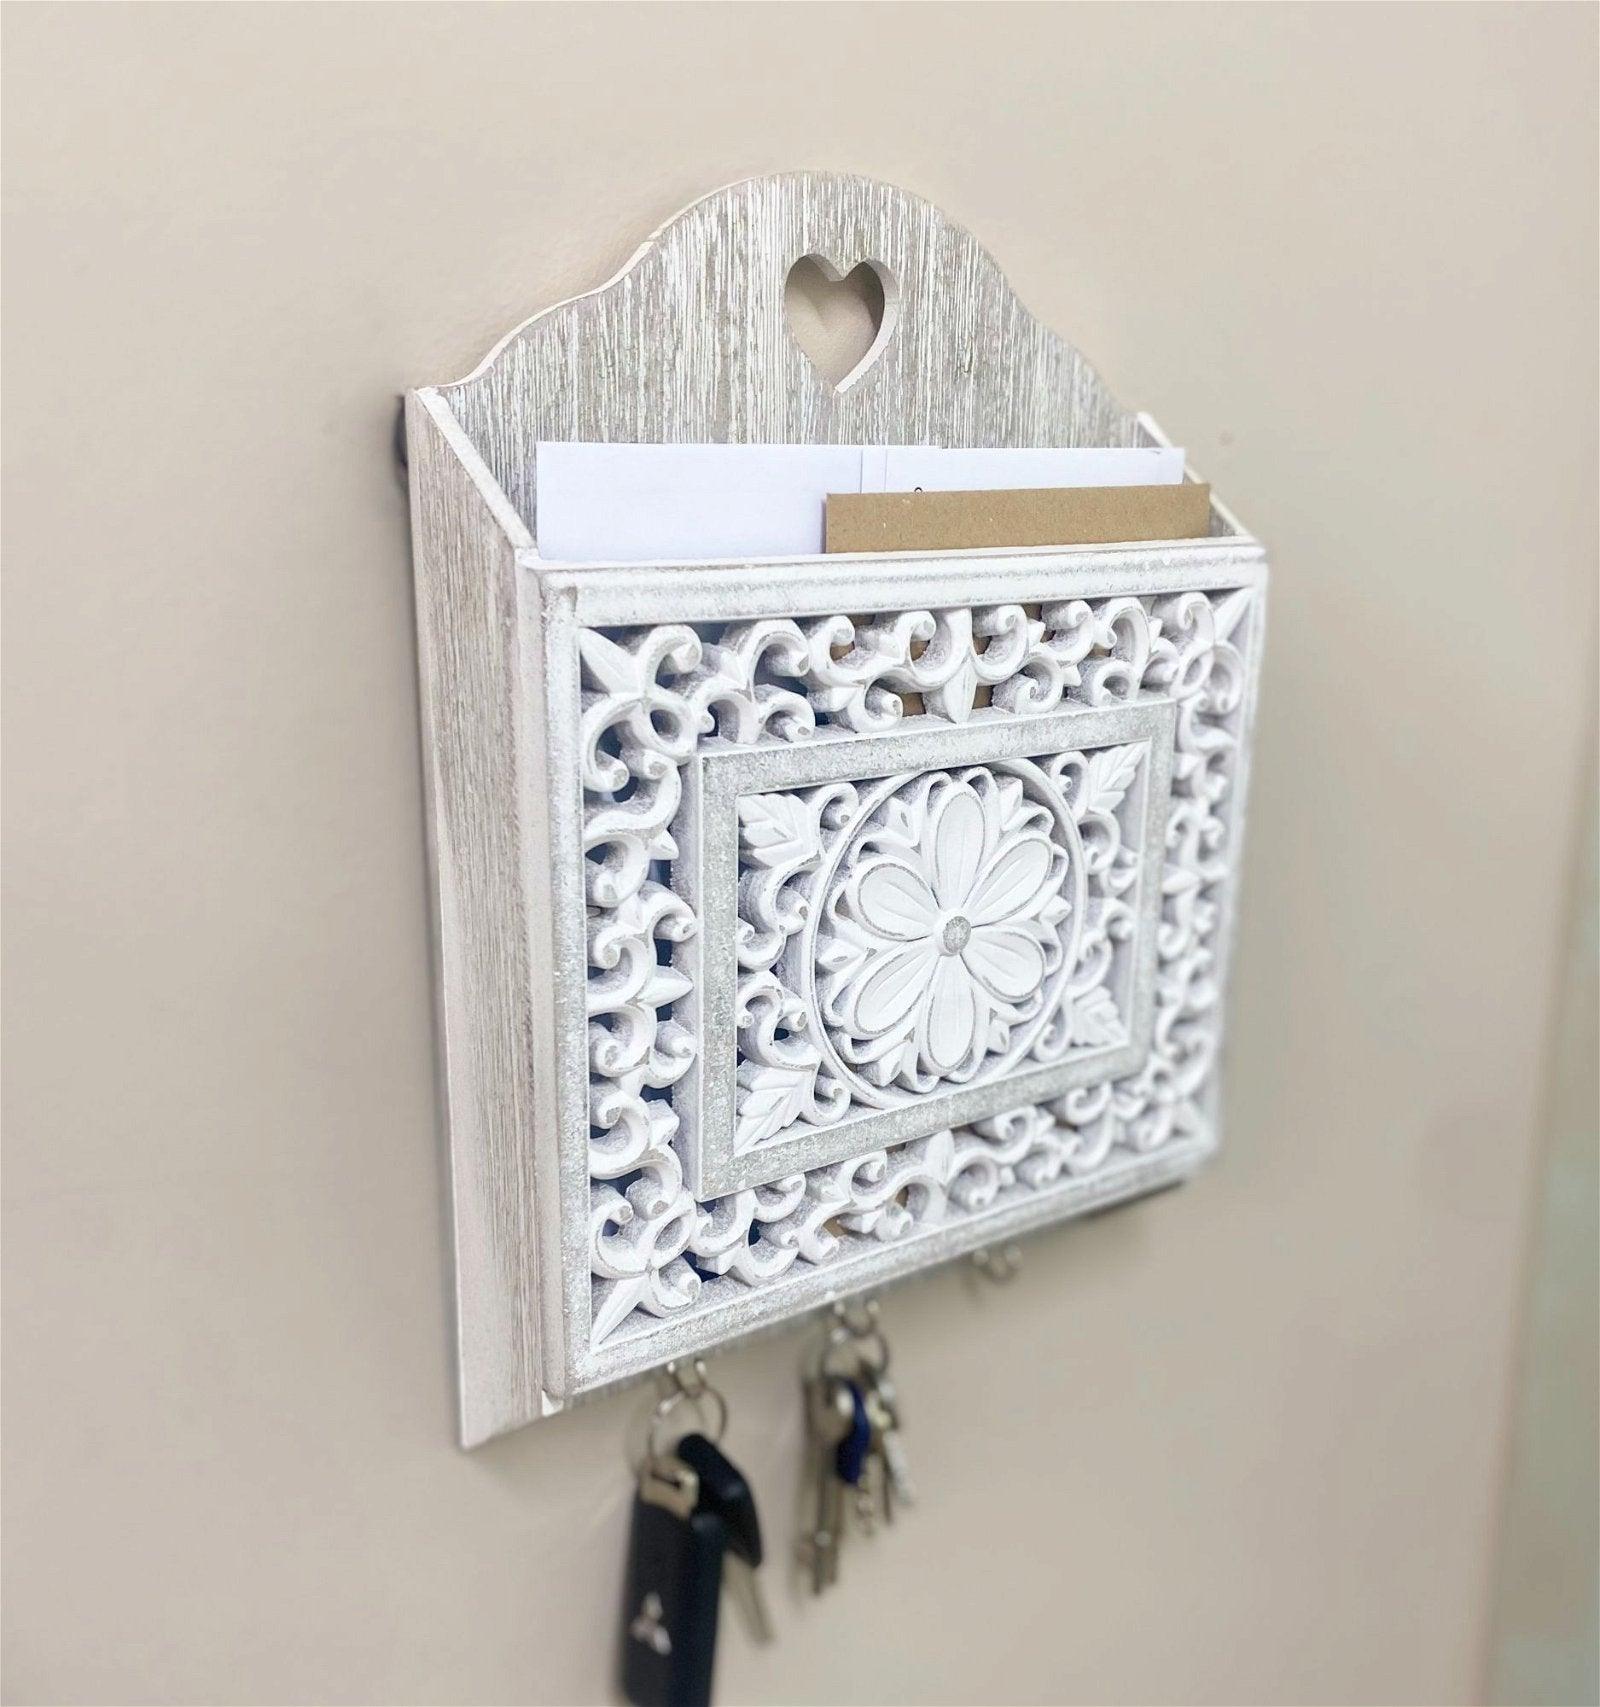 Grey Wooden 3 Hook Key Holder With Cutout Pattern Shelf-Decorative Kitchen Items